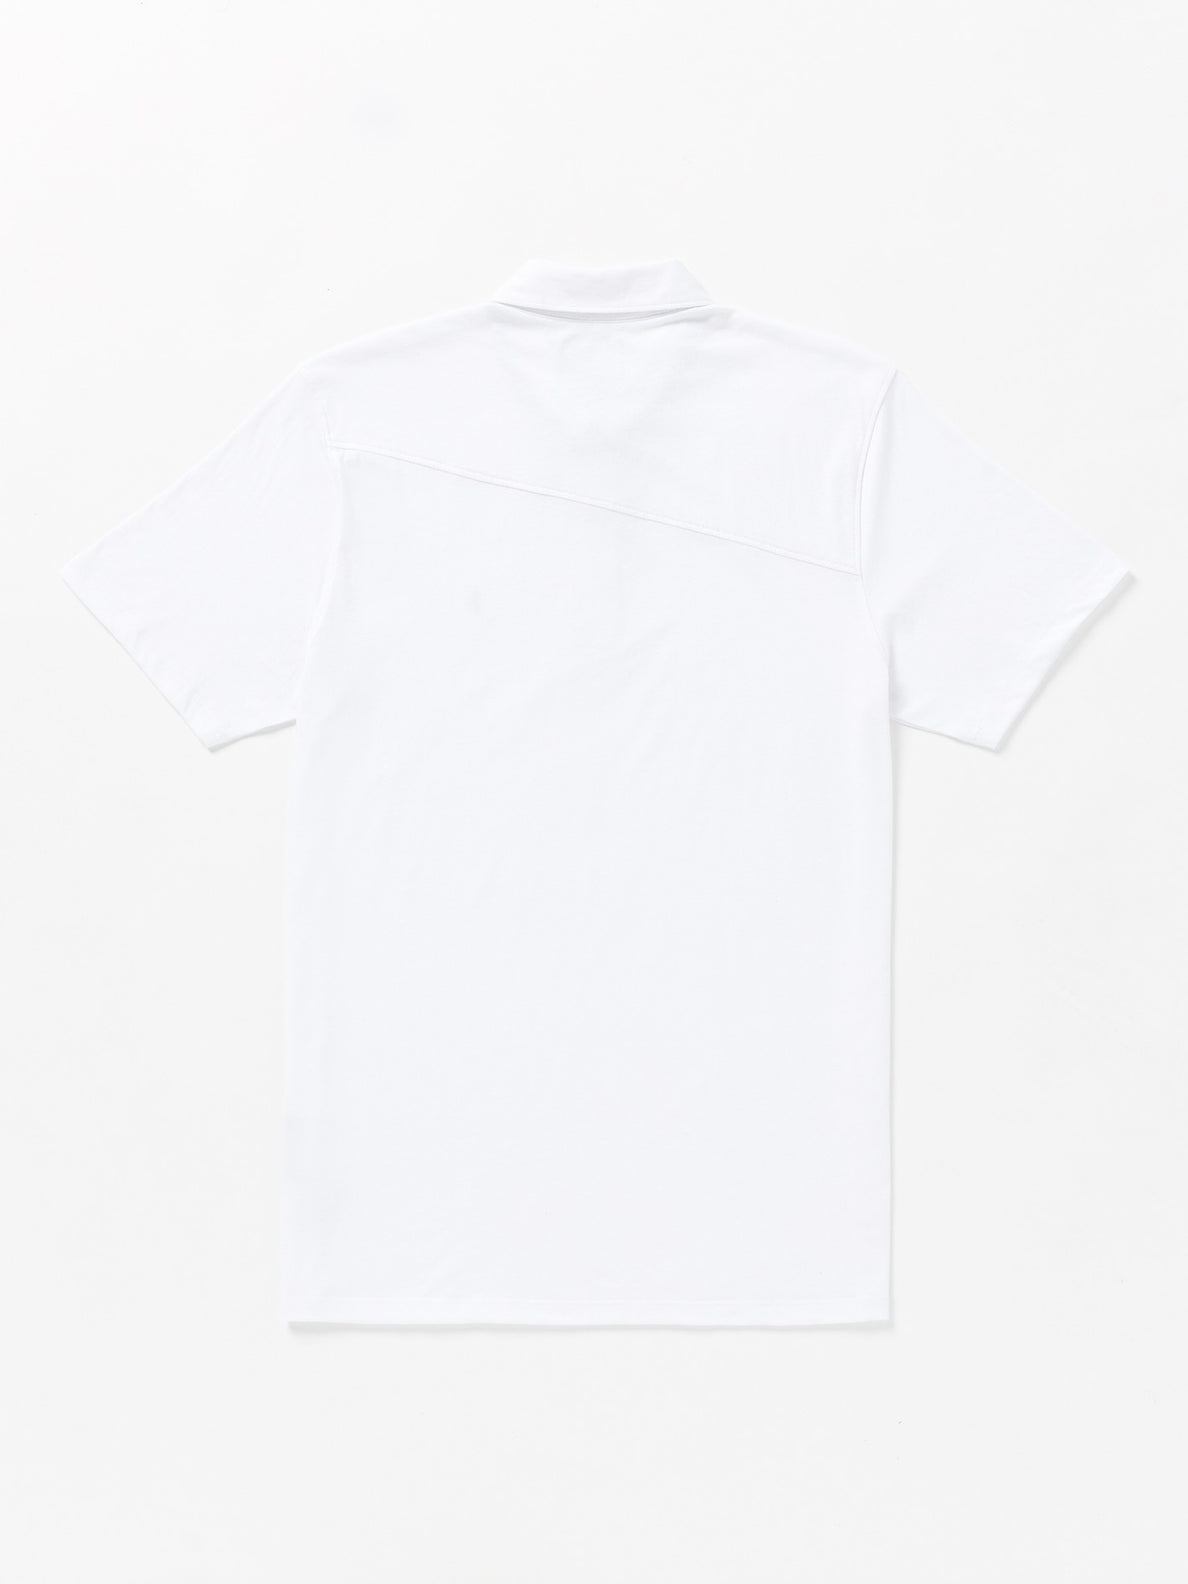 Wowzer Polo Short Sleeve Shirt - White